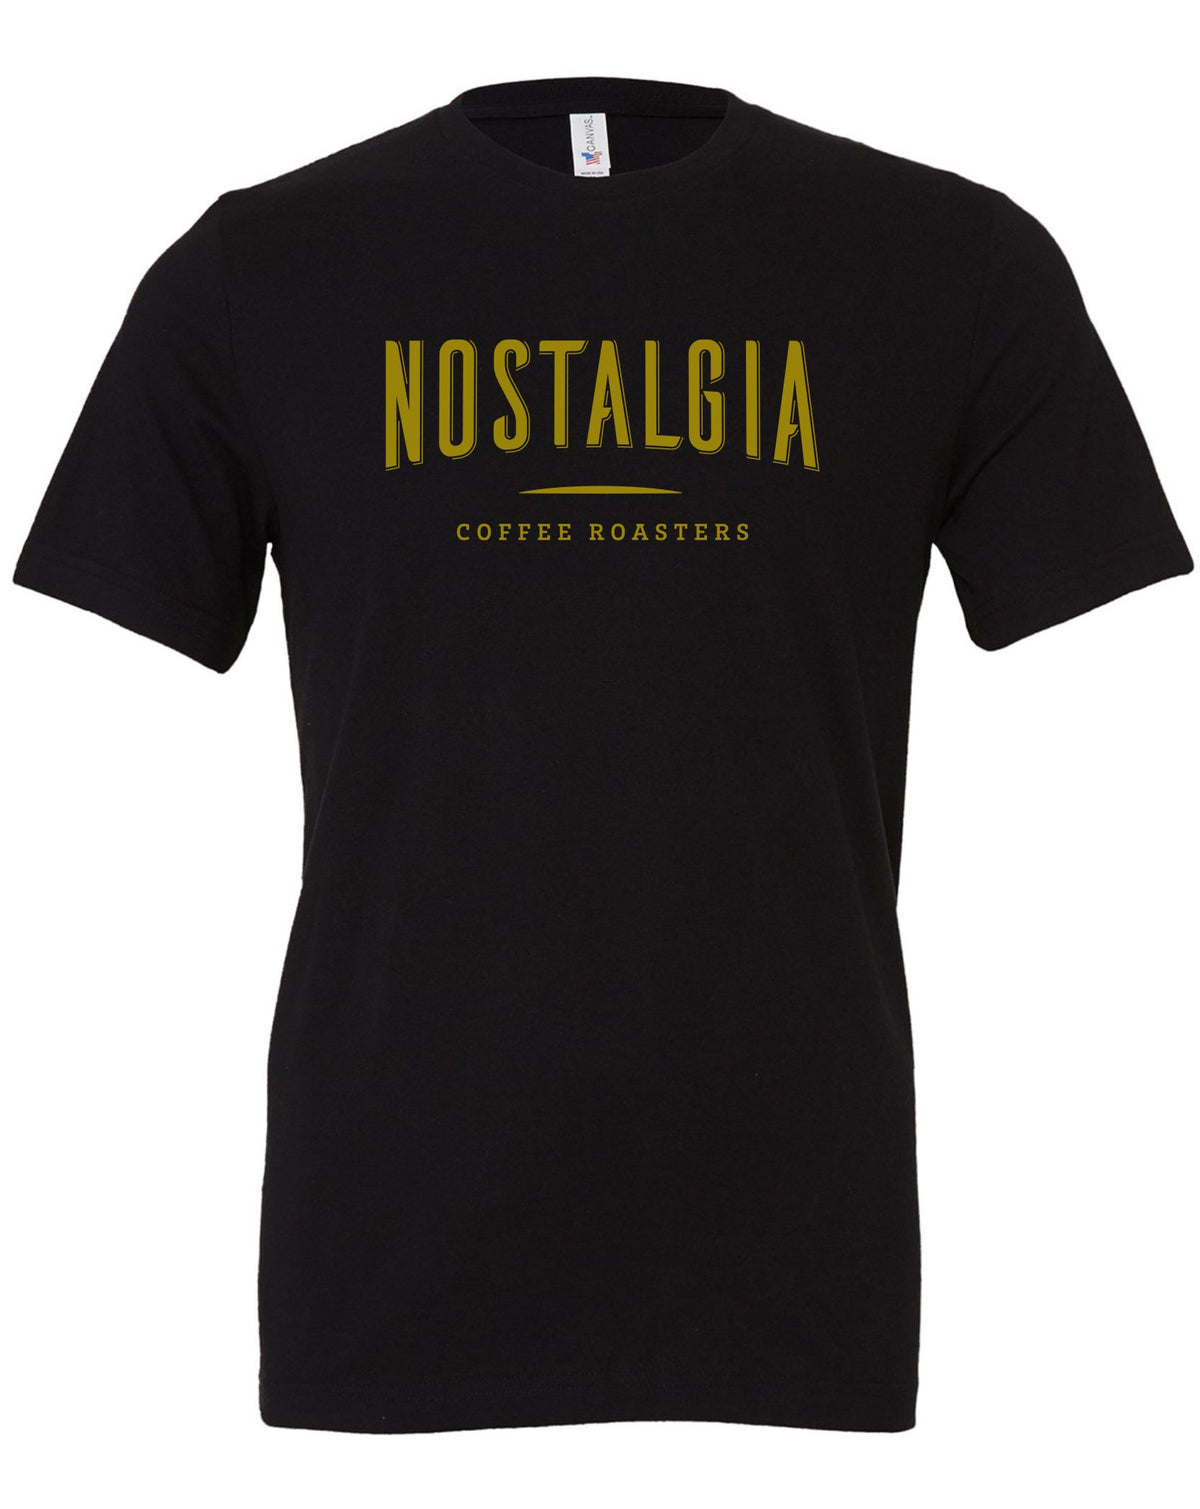 Nostalgia Coffee Roasters Tshirt